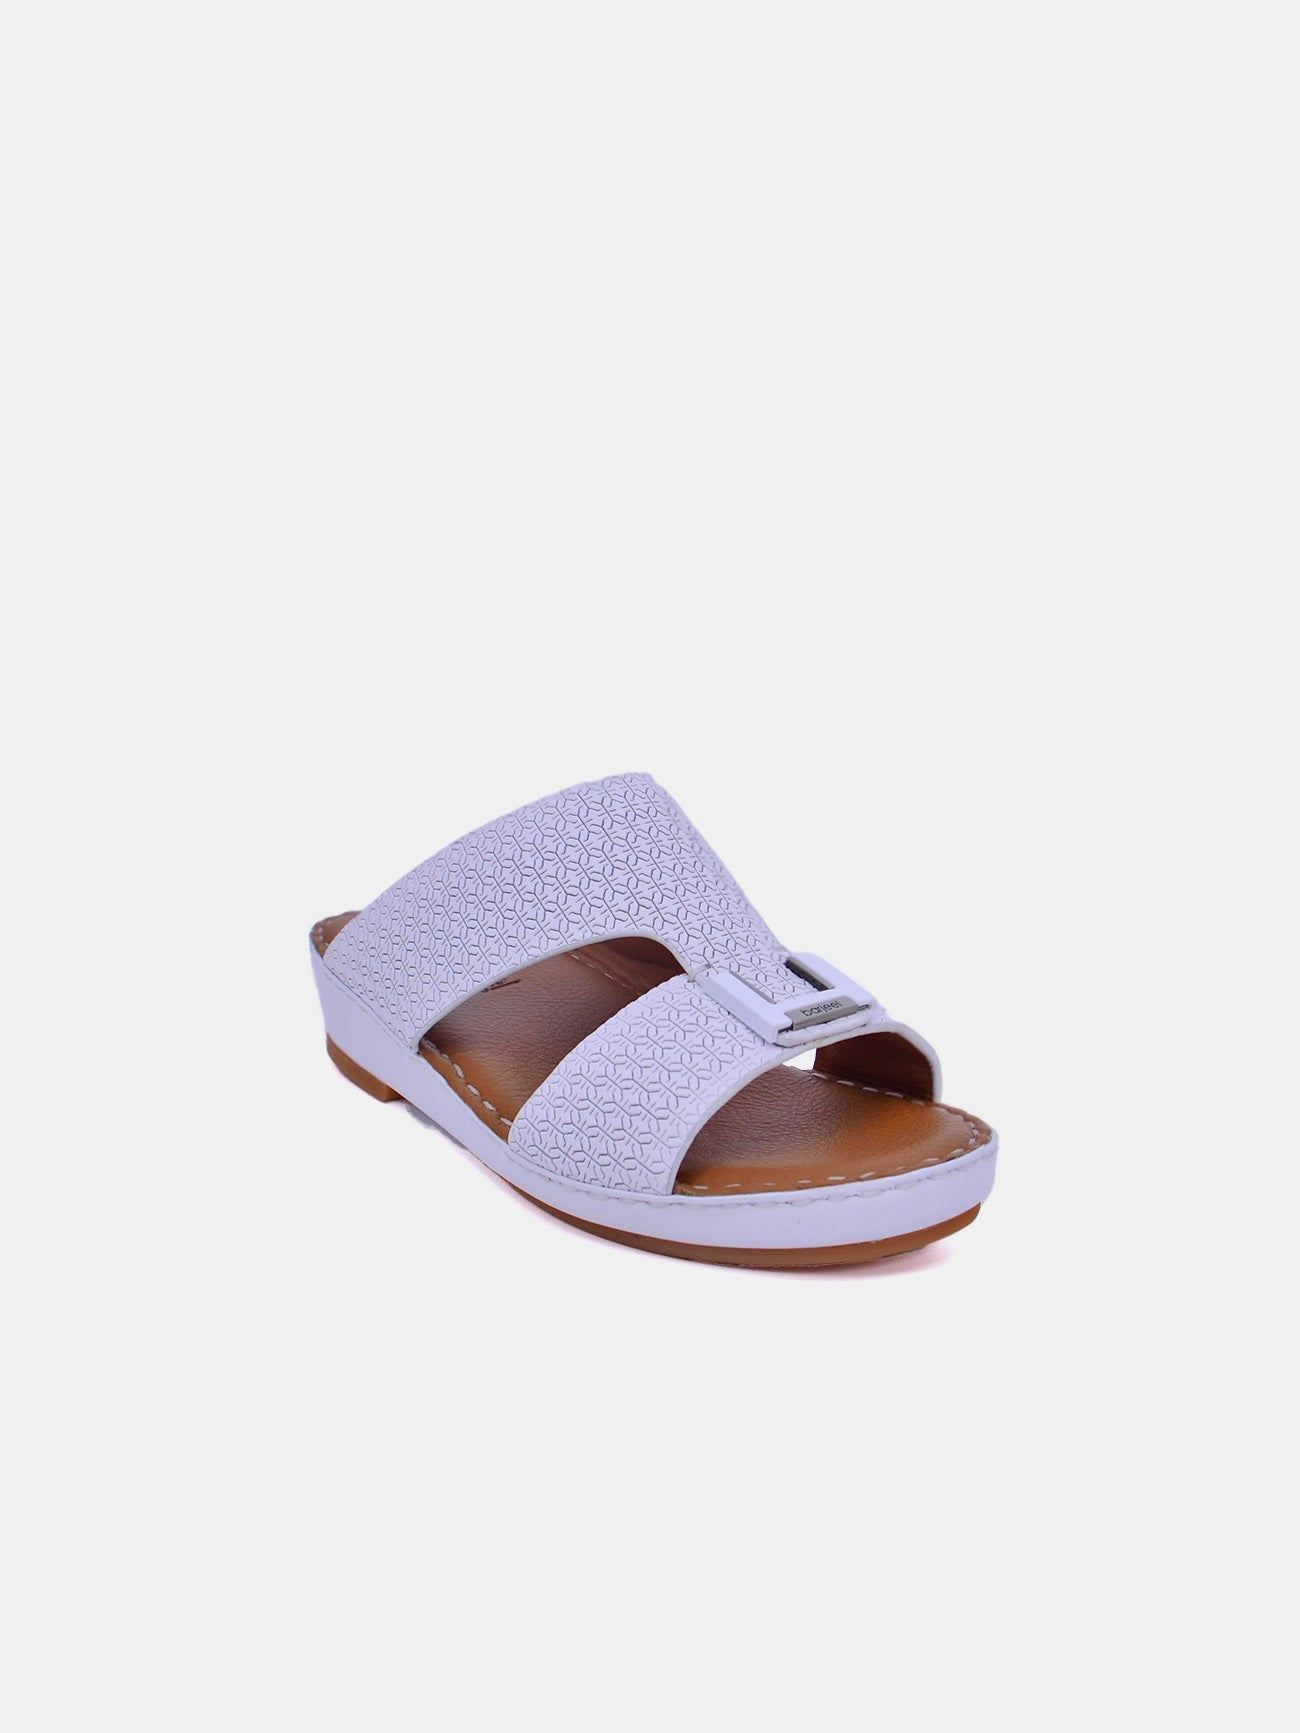 Barjeel Uno BSP1-01 Boys Arabic Sandals #color_White